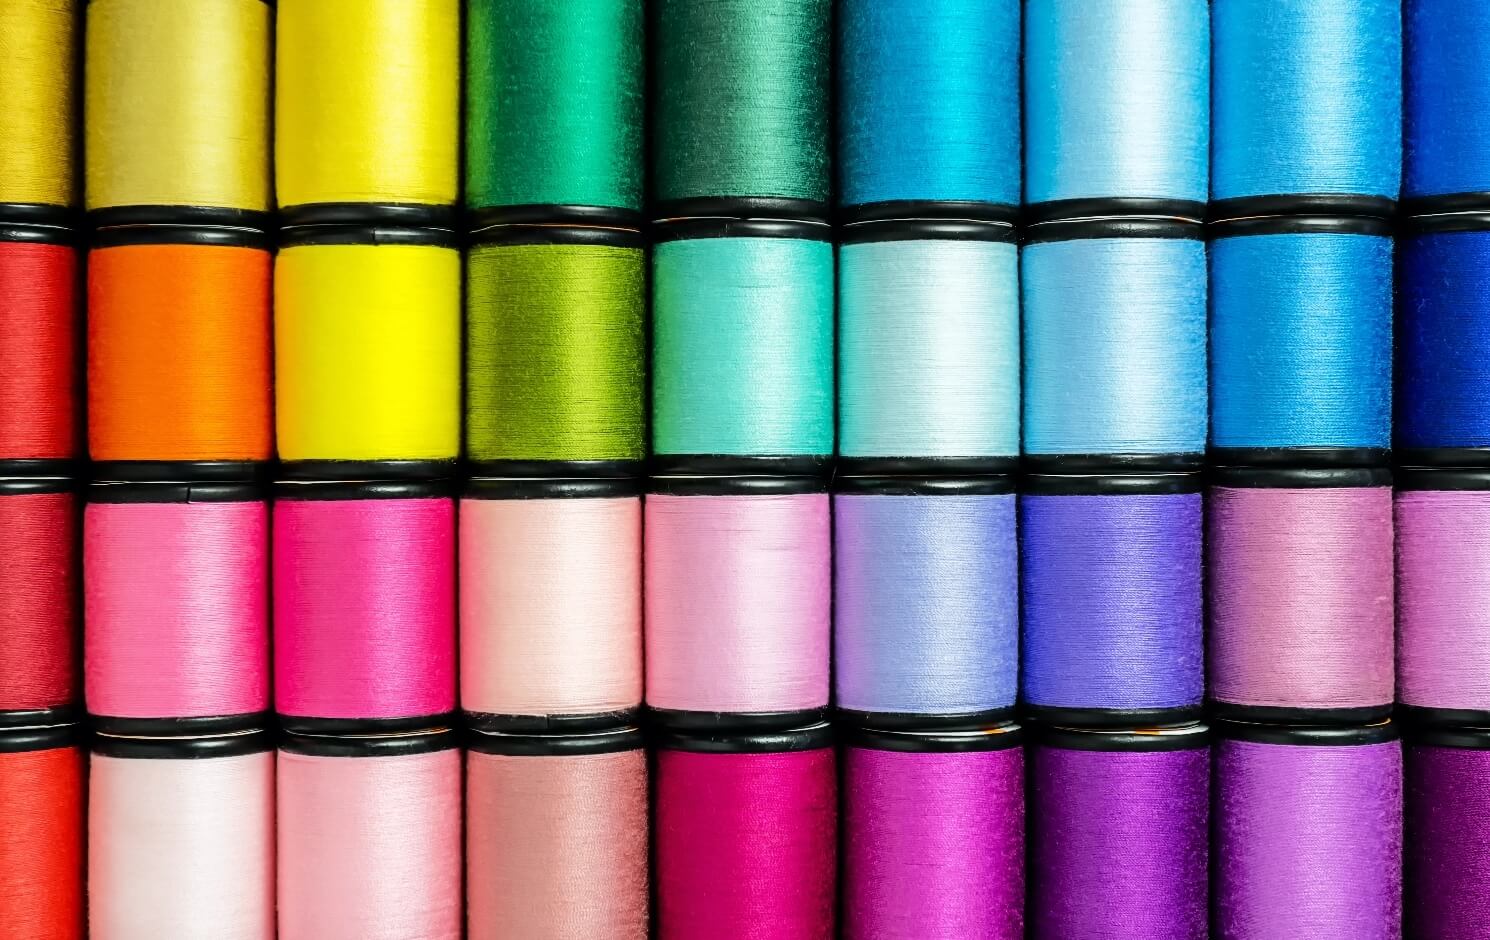 Thread Colours